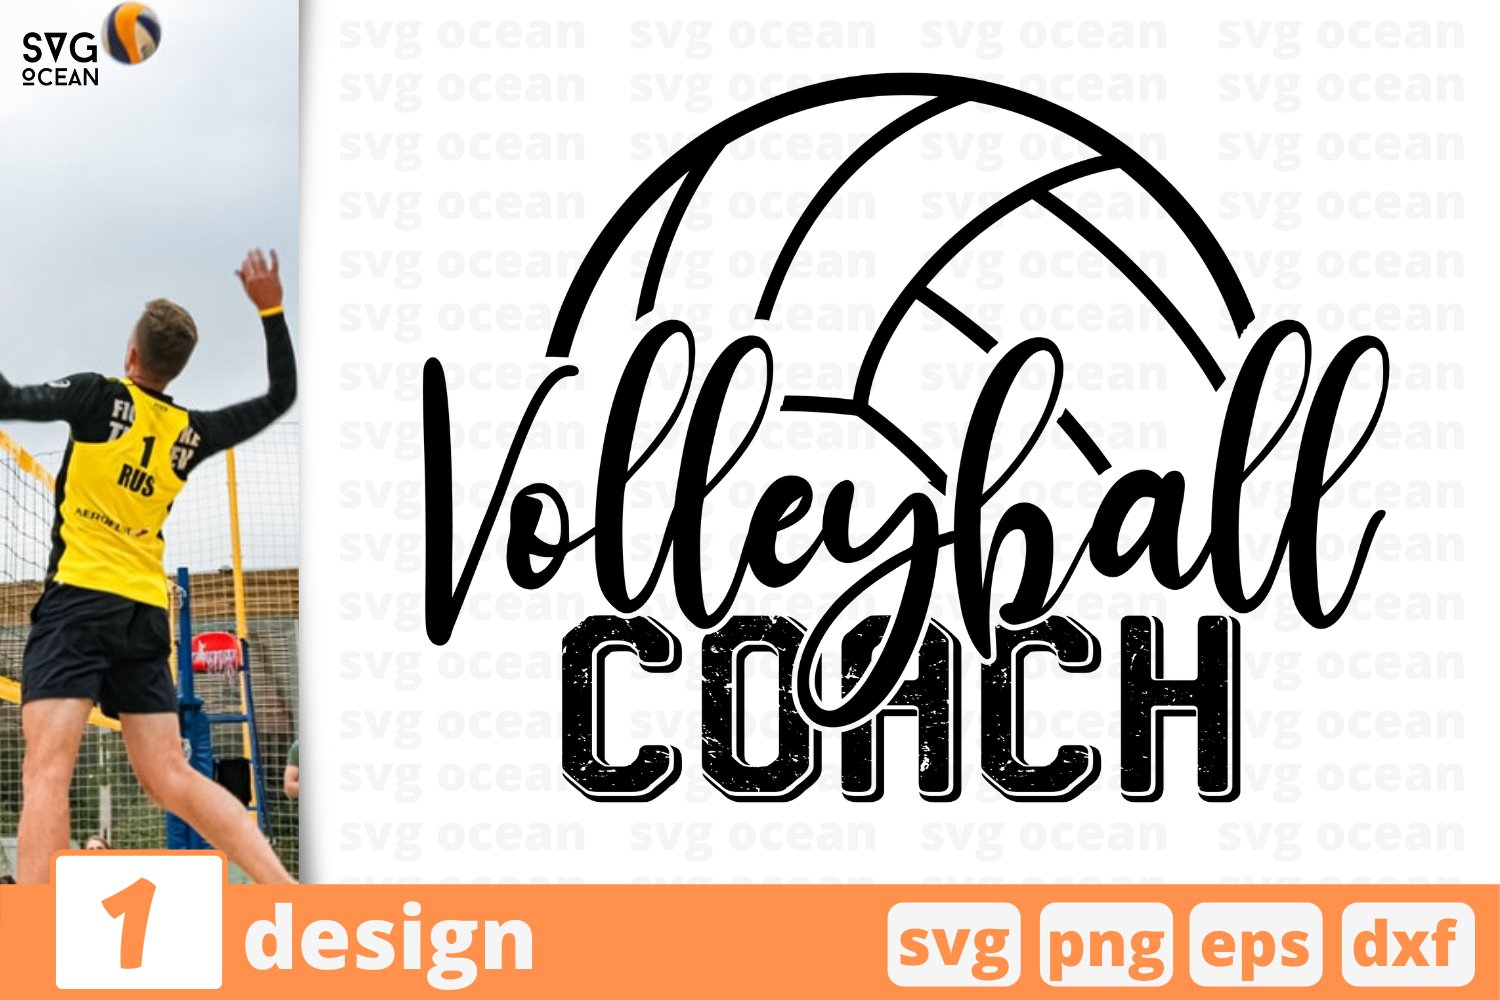 Volleyball coach design.